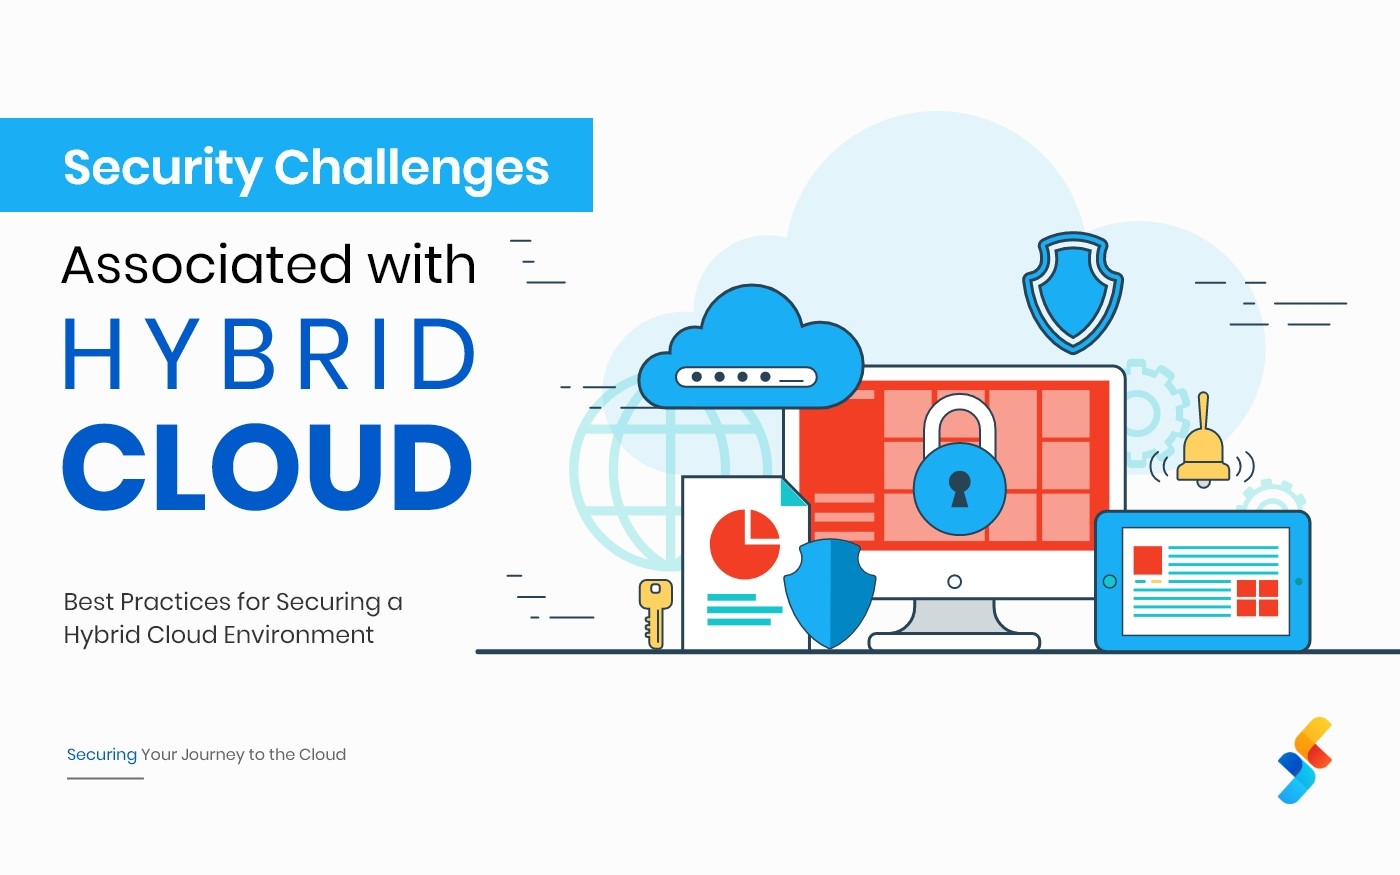 7 Hybrid Cloud Essential Security Elements